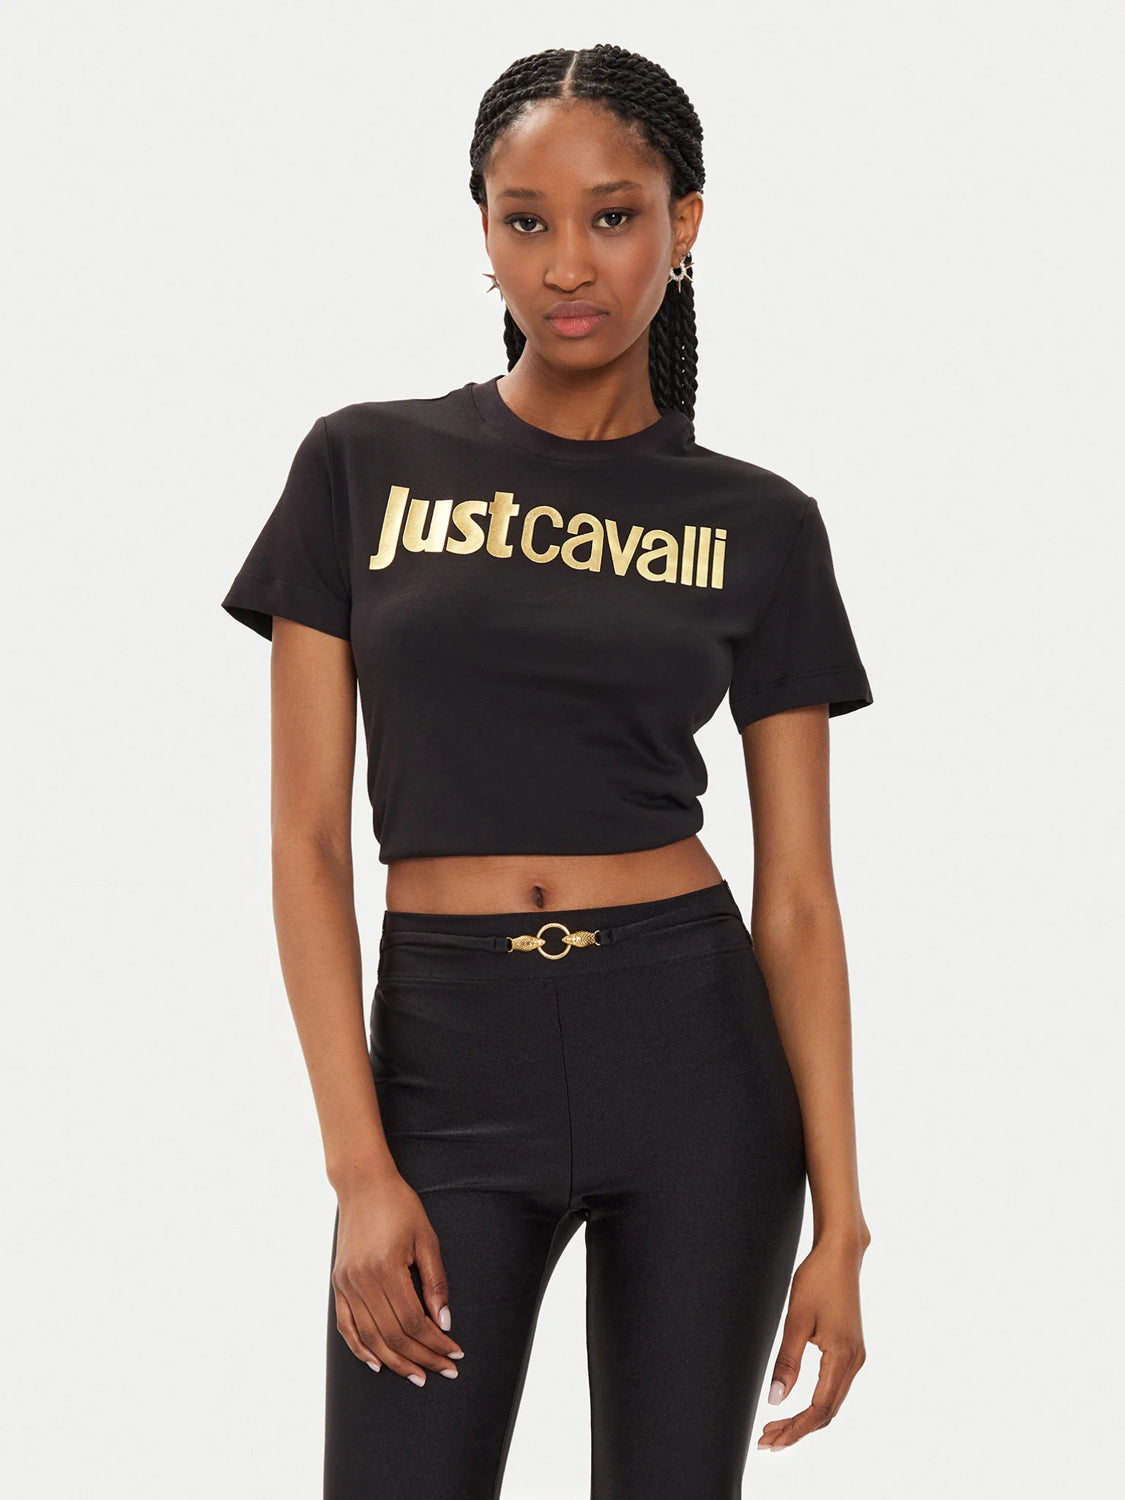 Just Cavalli T Shirt 76pahg11 Blk Gold Preto Ouro_shot3